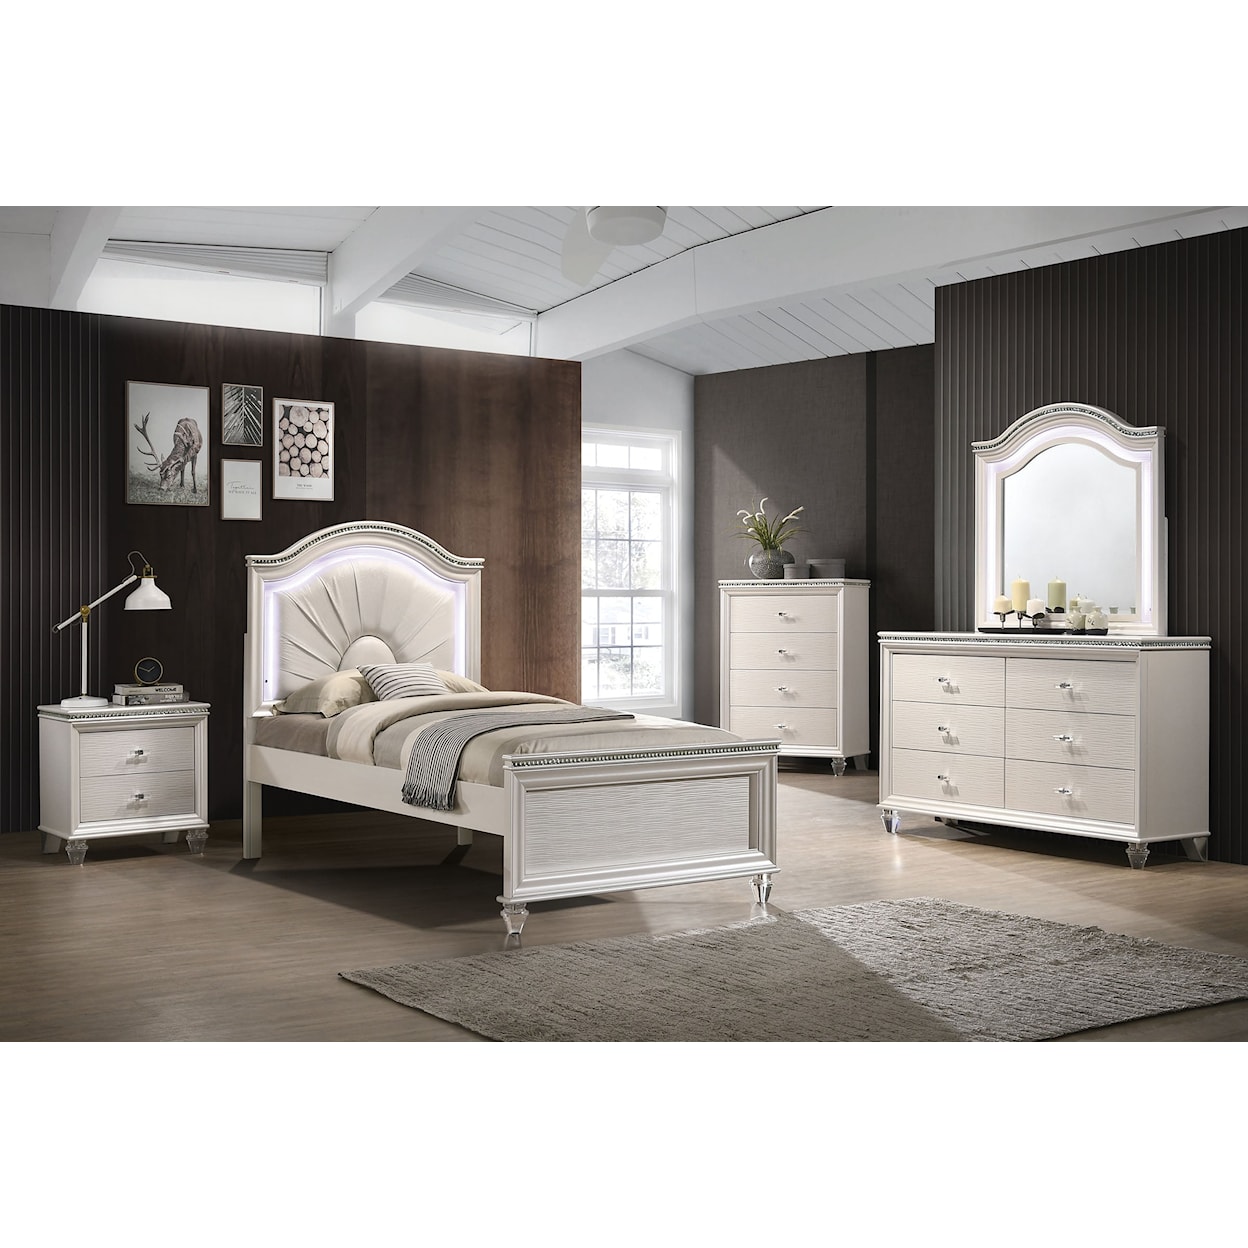 Furniture of America Allie 4-Piece Full Bedroom Set